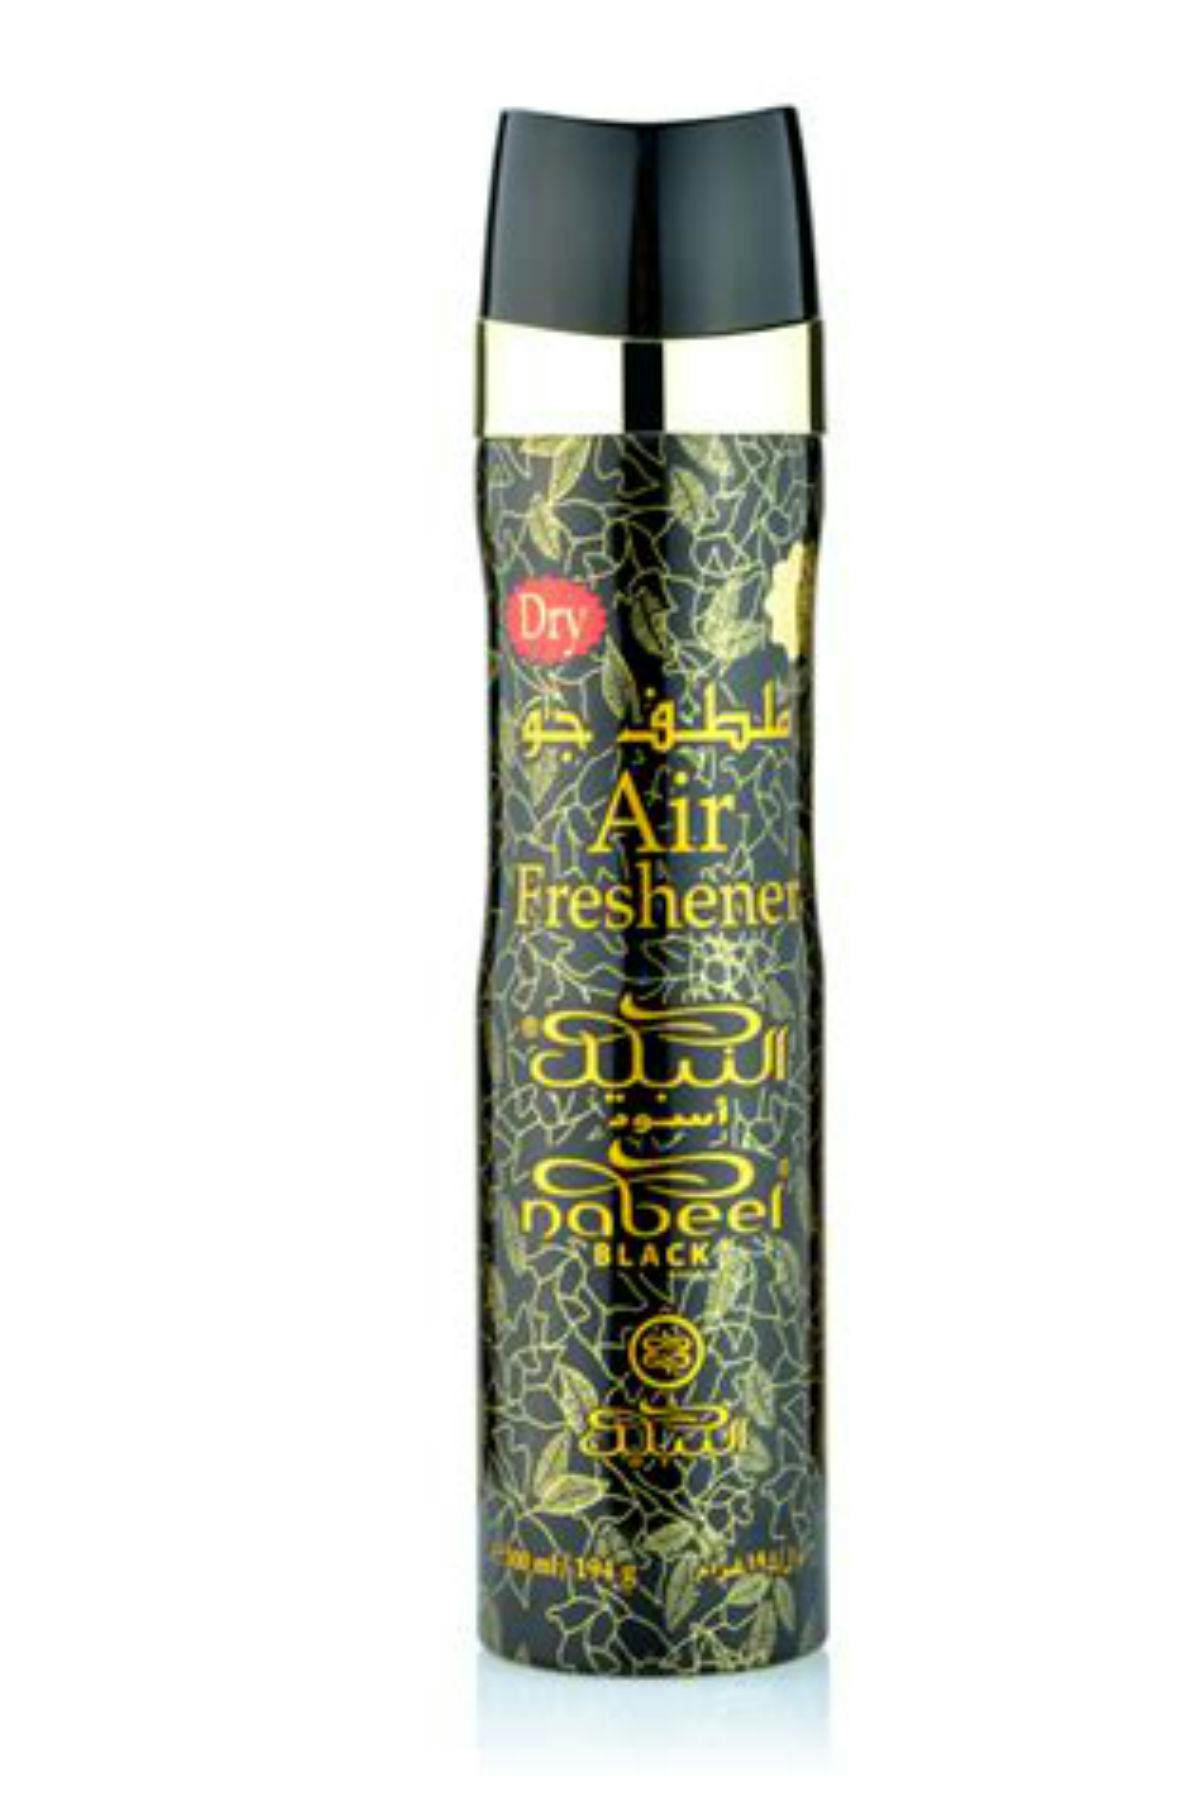 Nabeel Black Air Freshener